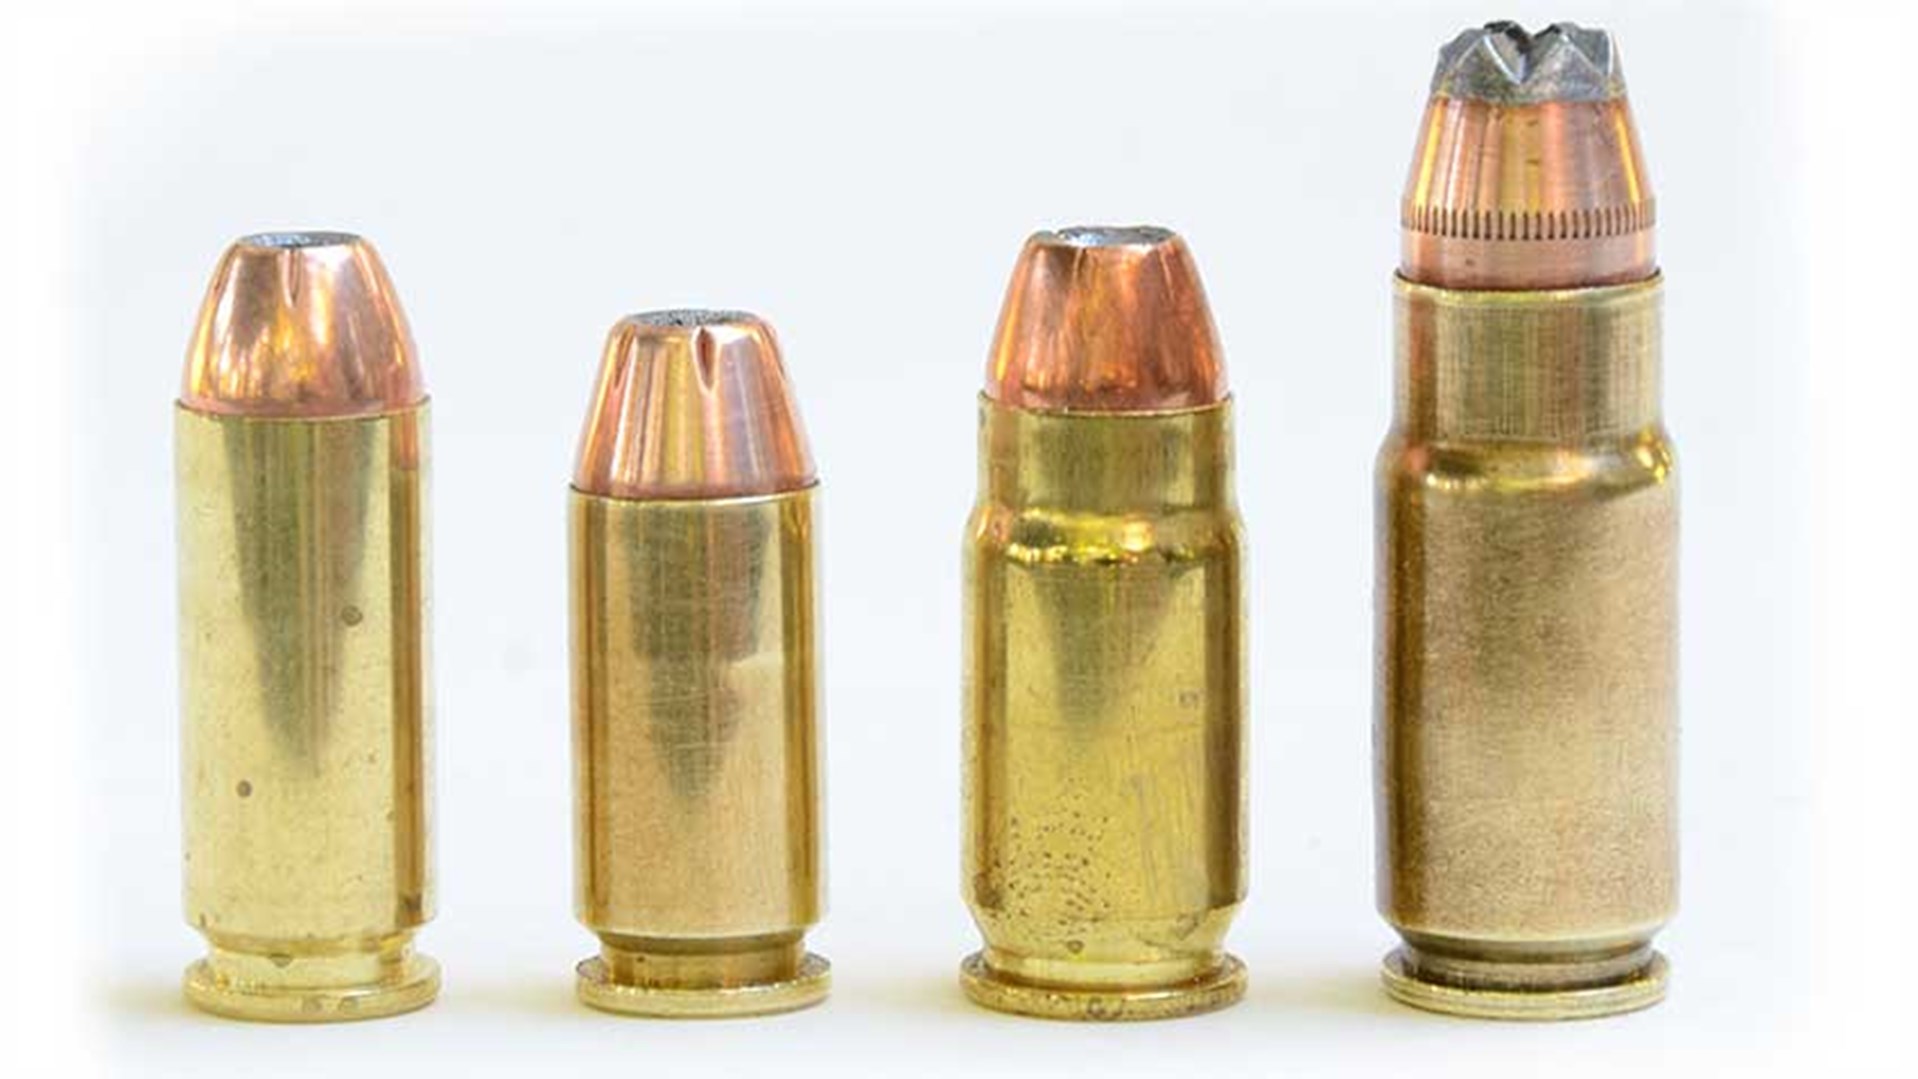 Bullets cartridges brass cylinders ammunition ammo line row picket fence arrangement on white